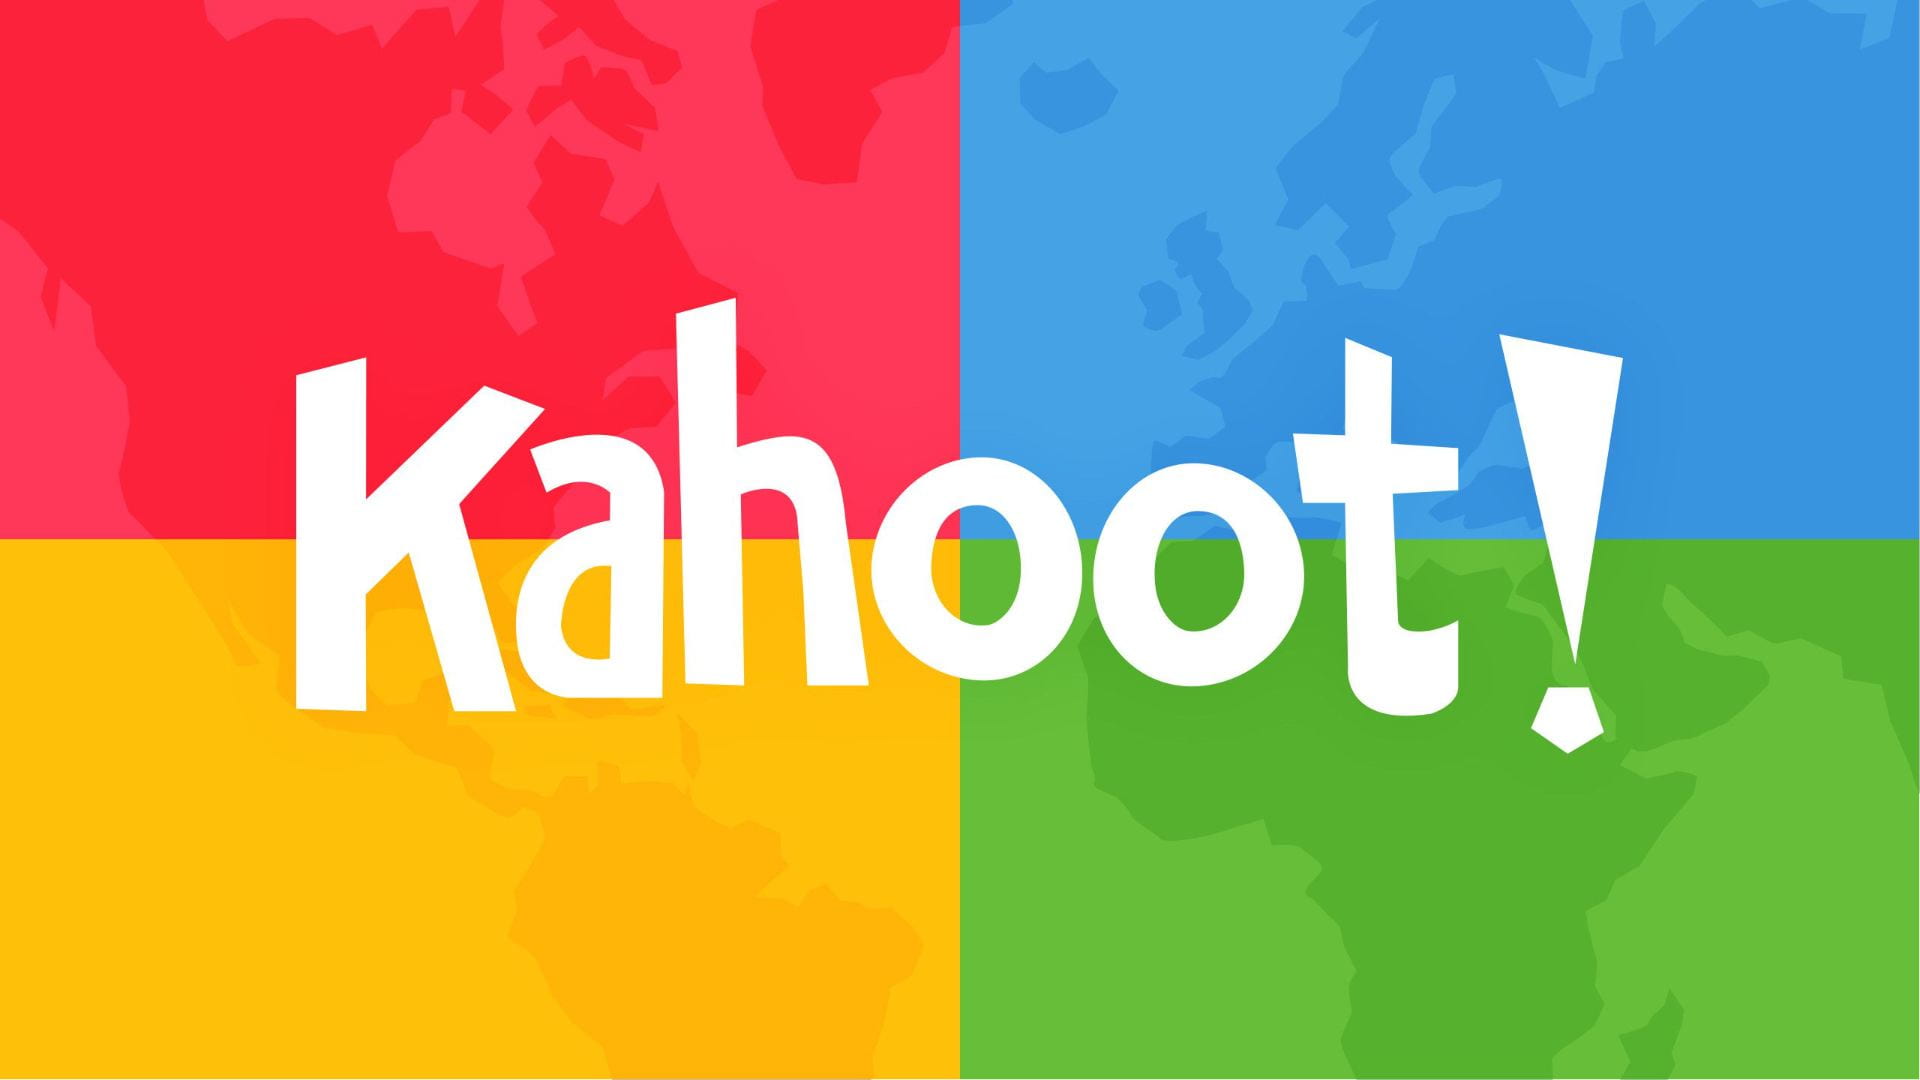 Utilizing Kahoot to assess understanding - IT Teaching Resources